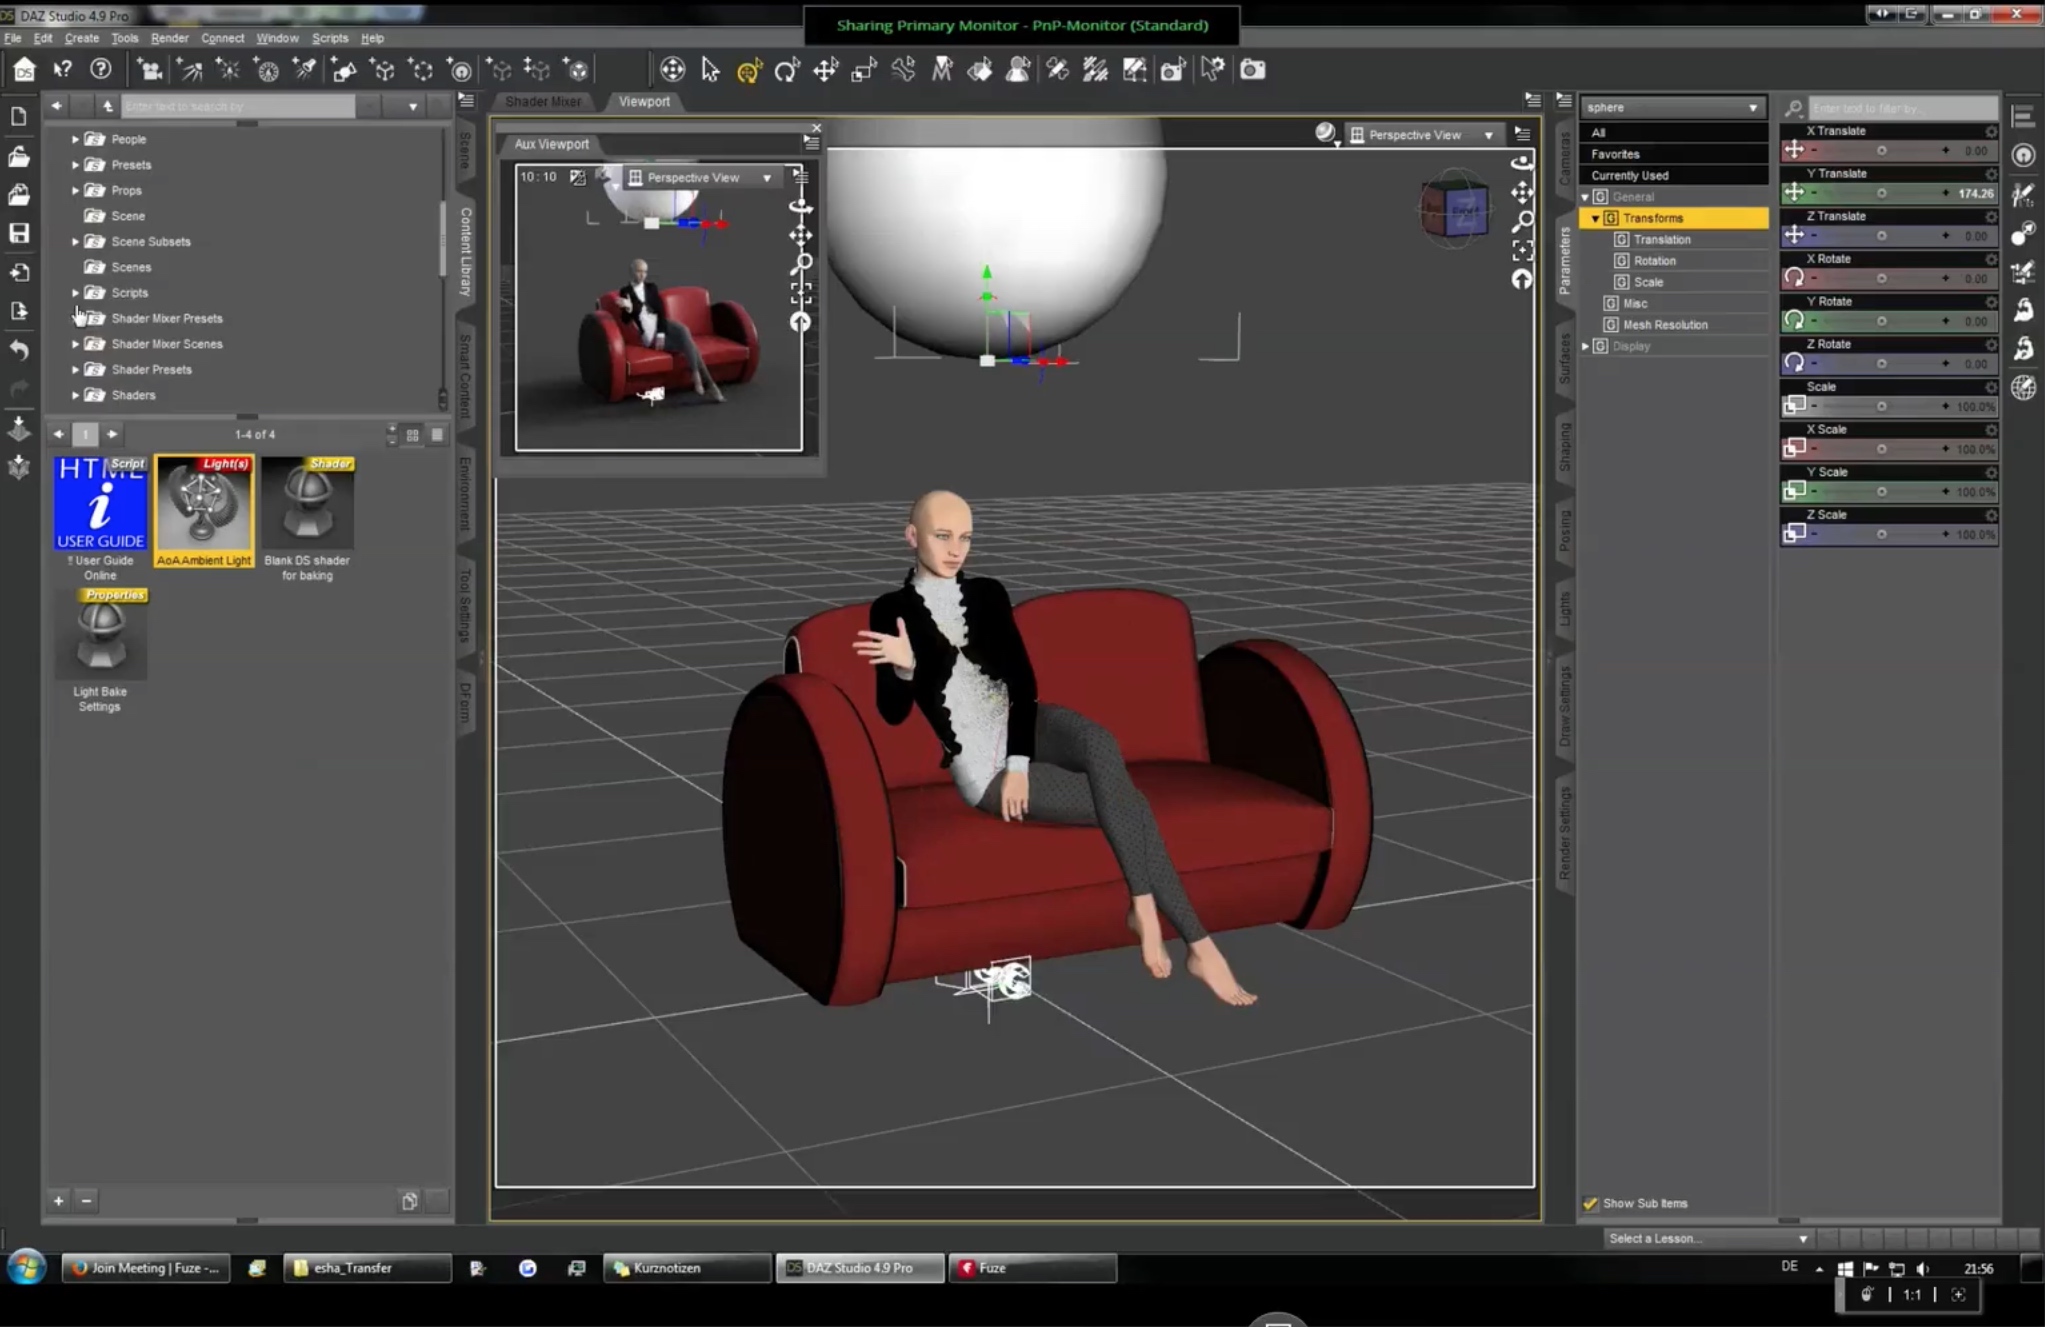 Daz Studio Foundations and Essentials Course by: Digital Art Liveesha, 3D Models by Daz 3D